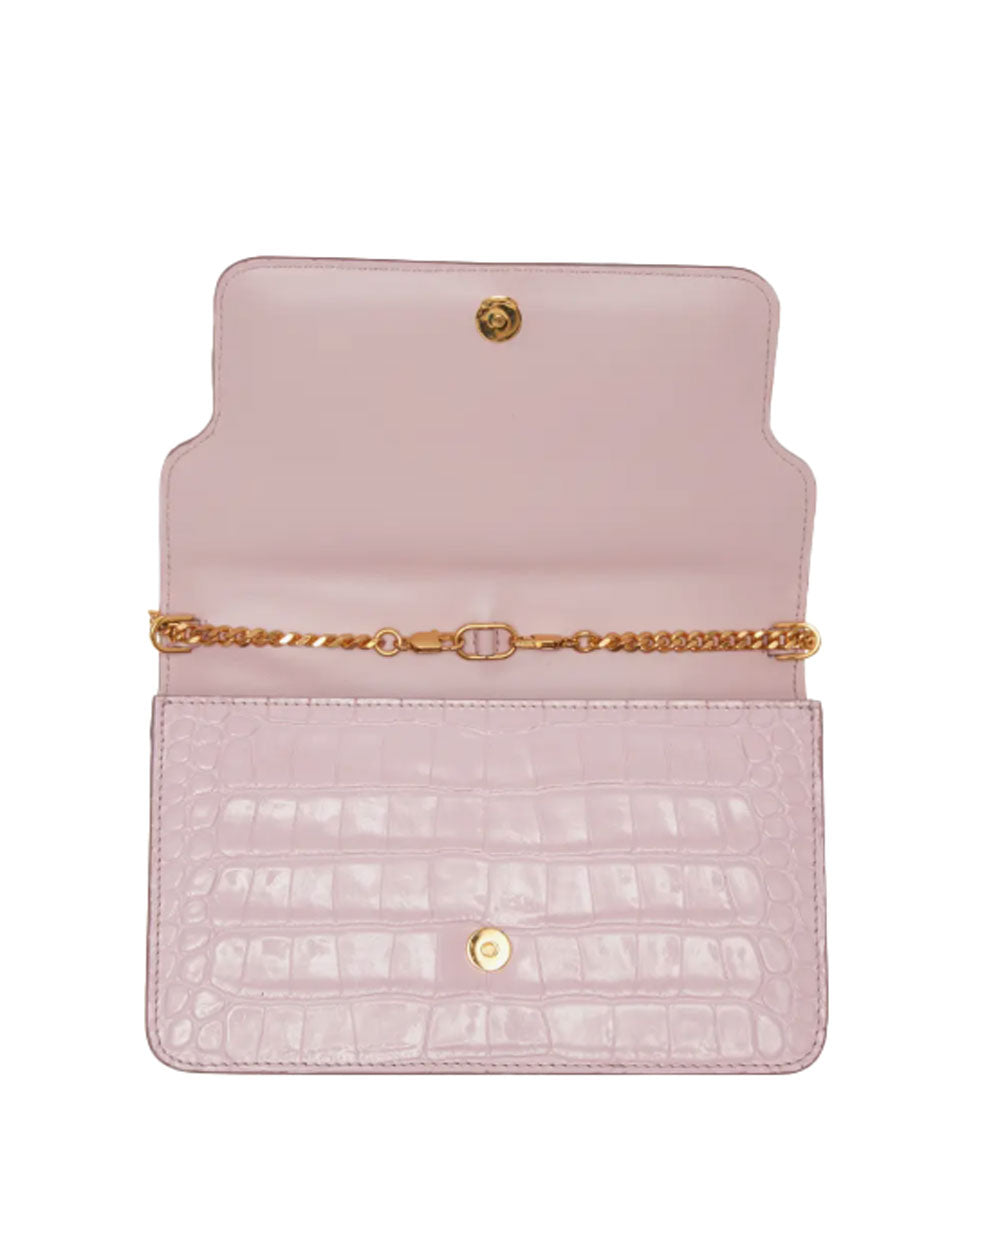 Stamped Crocodile Whitney Shoulder Bag in Pastel Pink